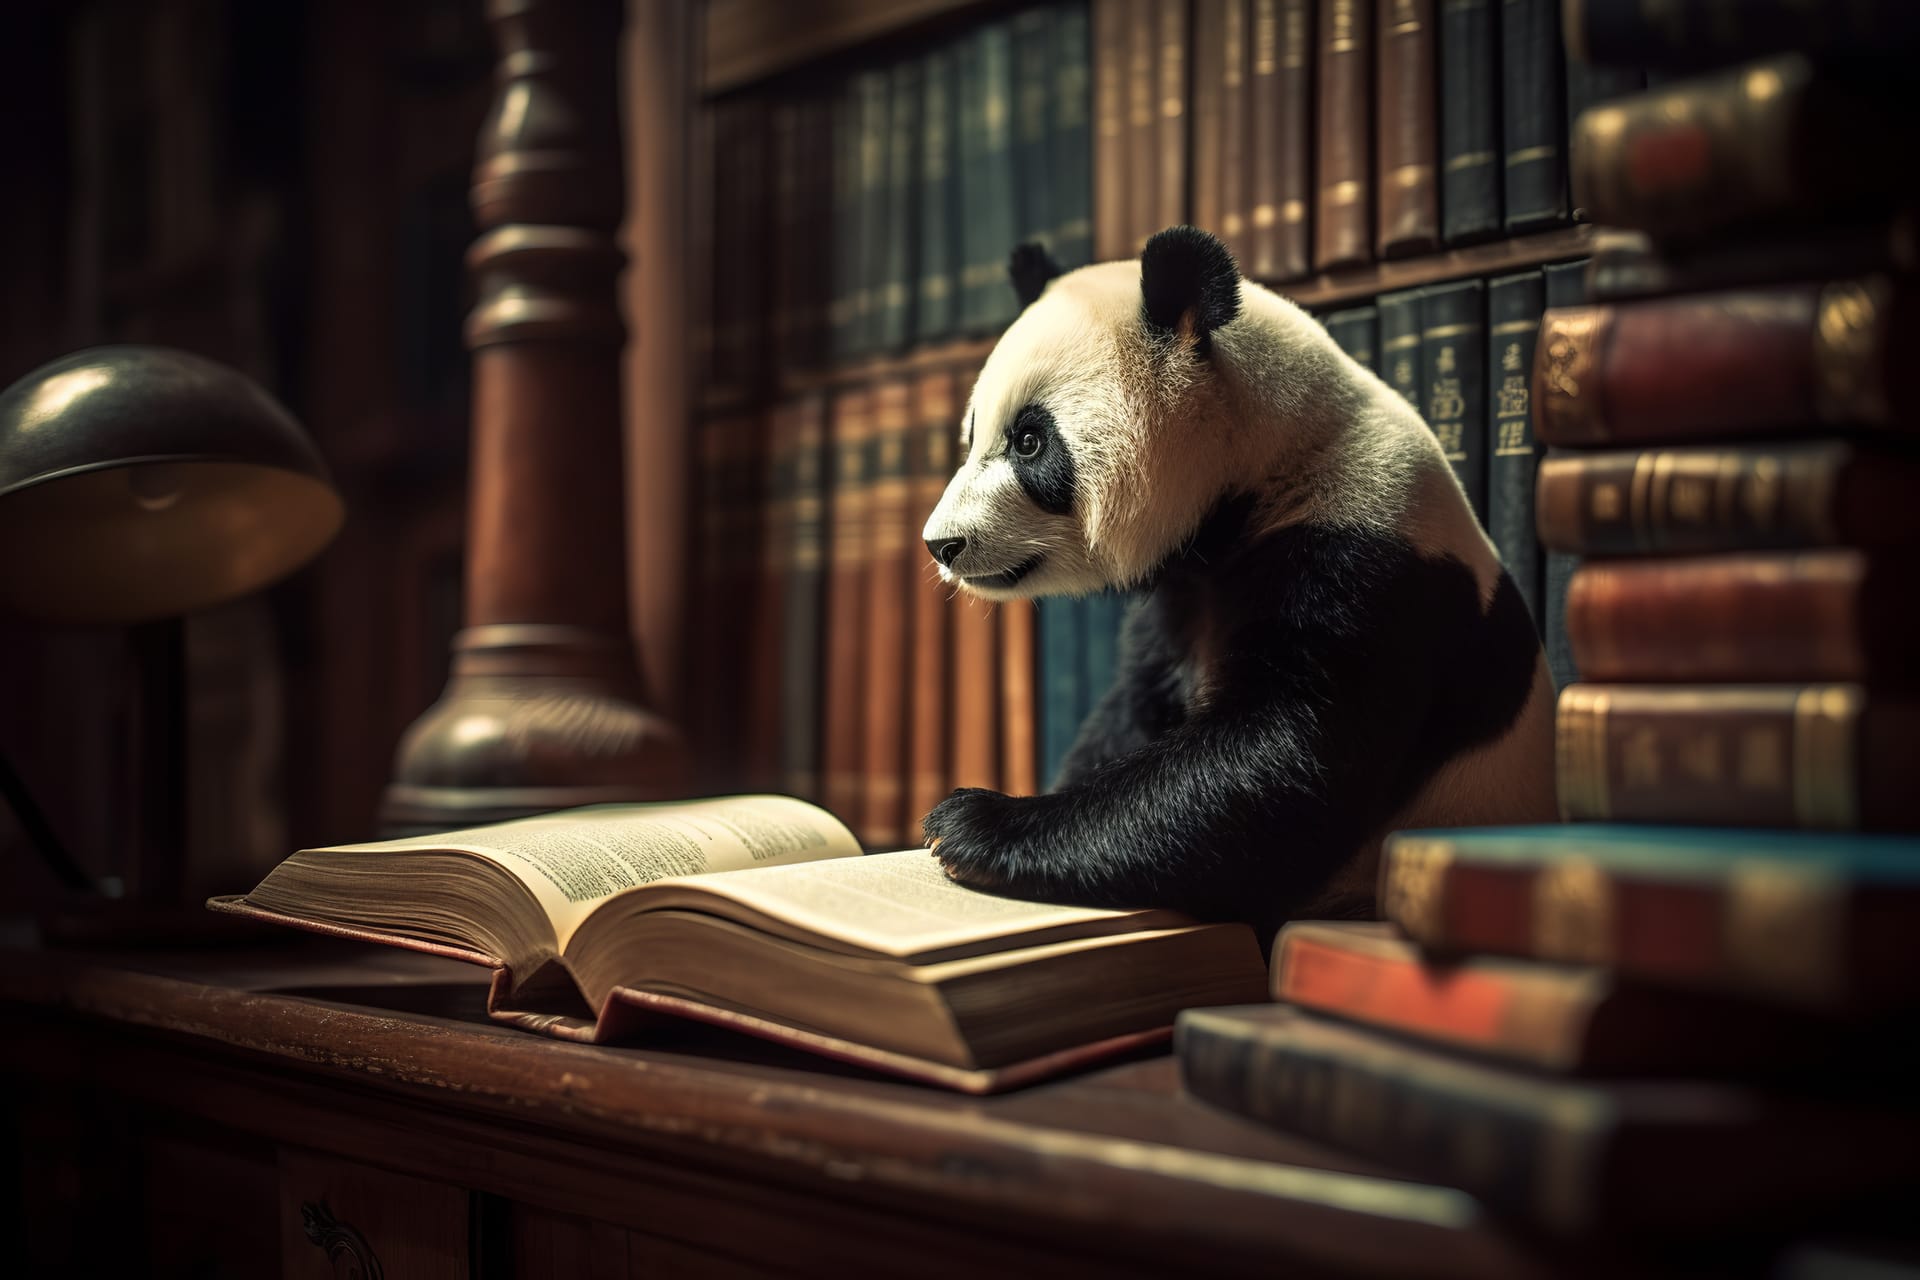 Panda seeking spiritual enlightenment through literature retreats guidance